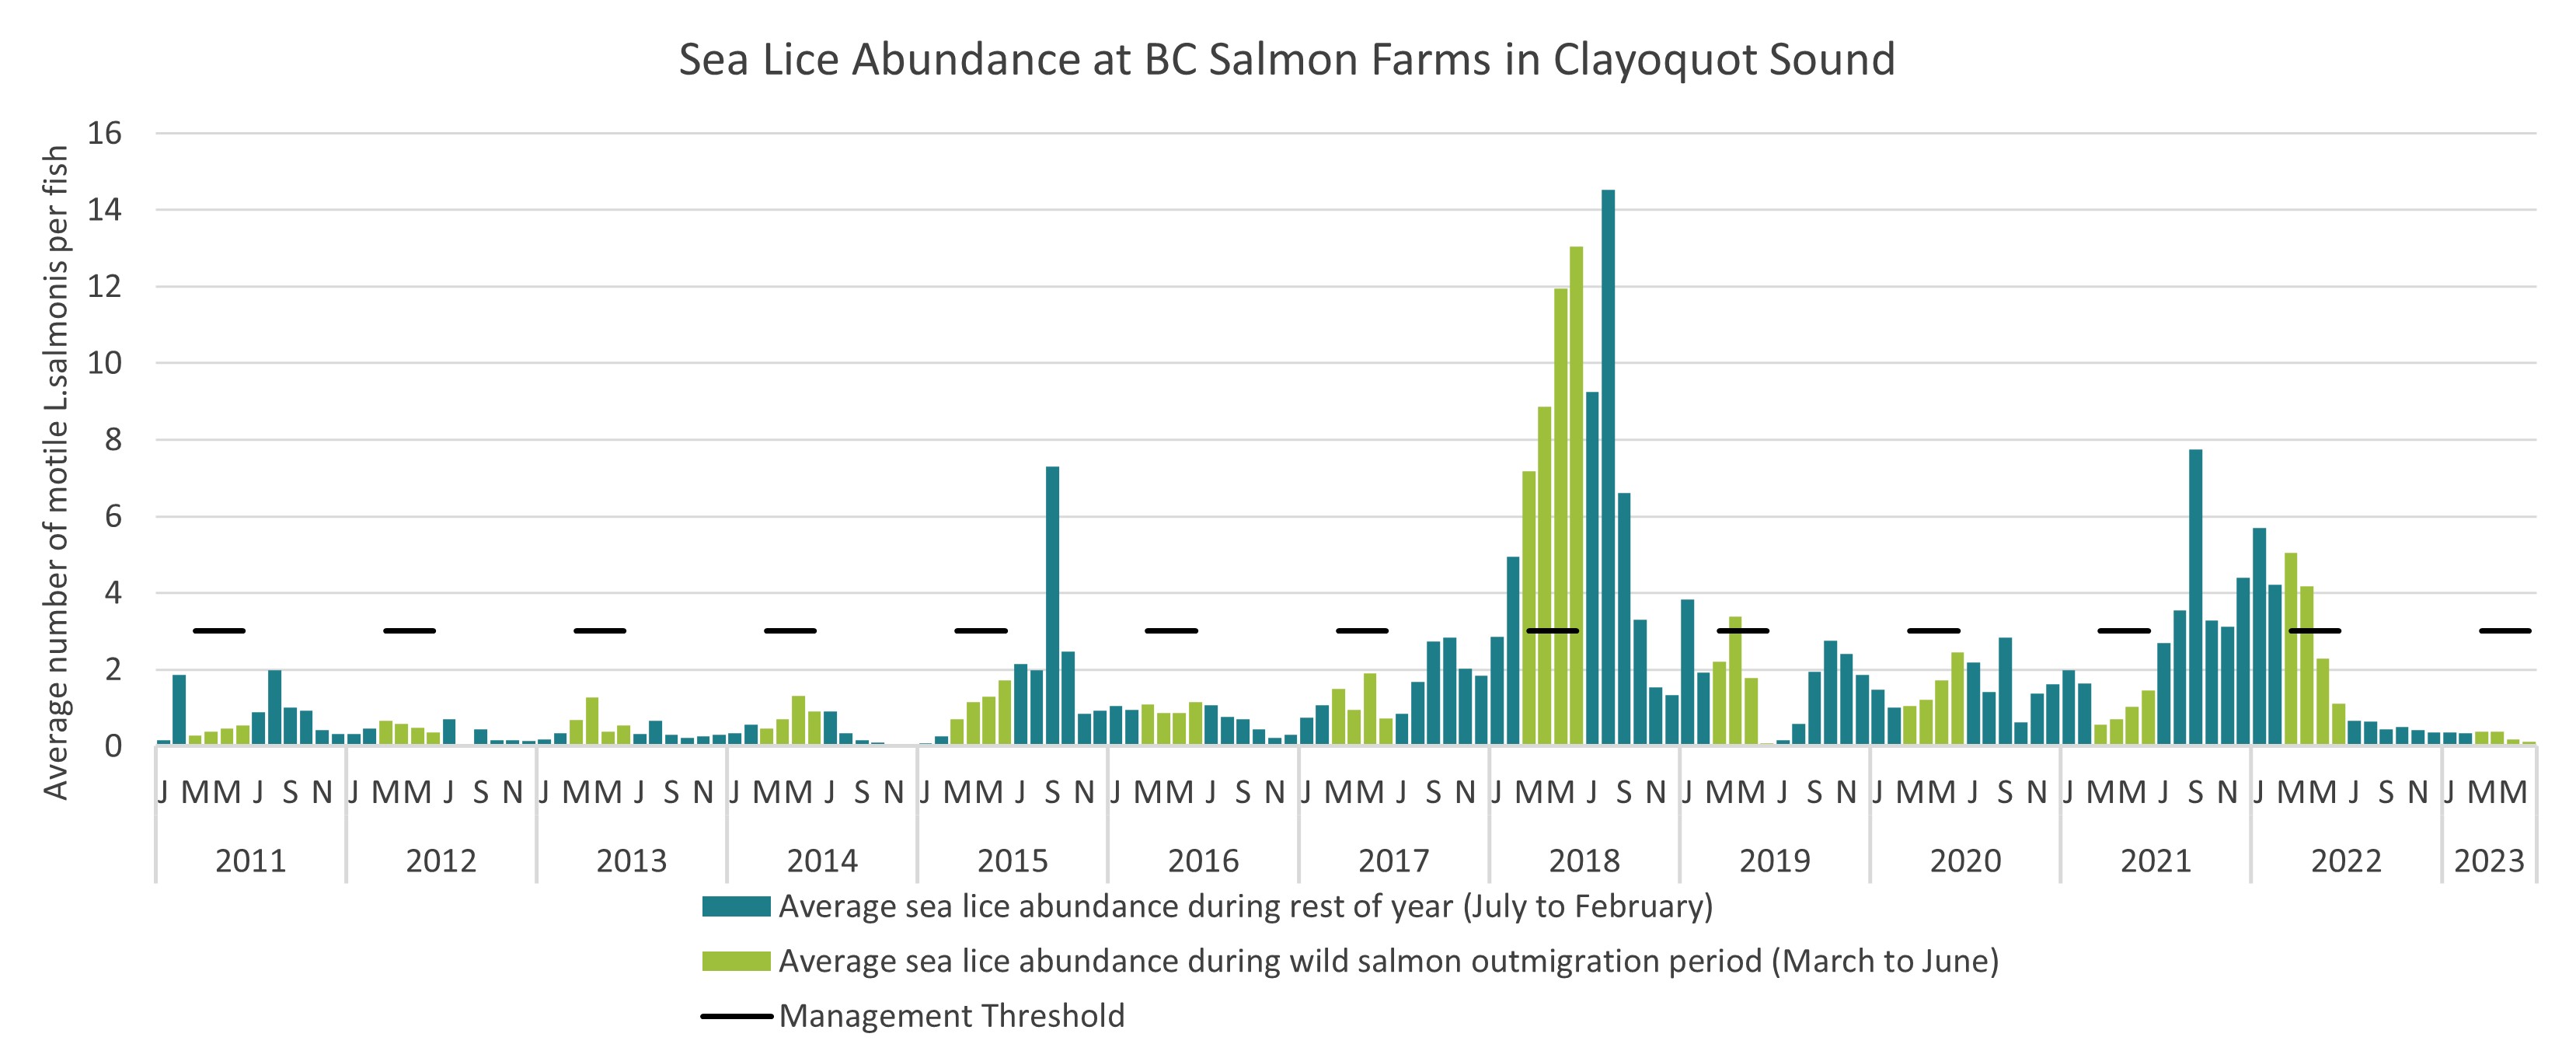 Sea Lice Abundance at BC Salmon Farms in Clayoquot Sound, 2011 to 2022